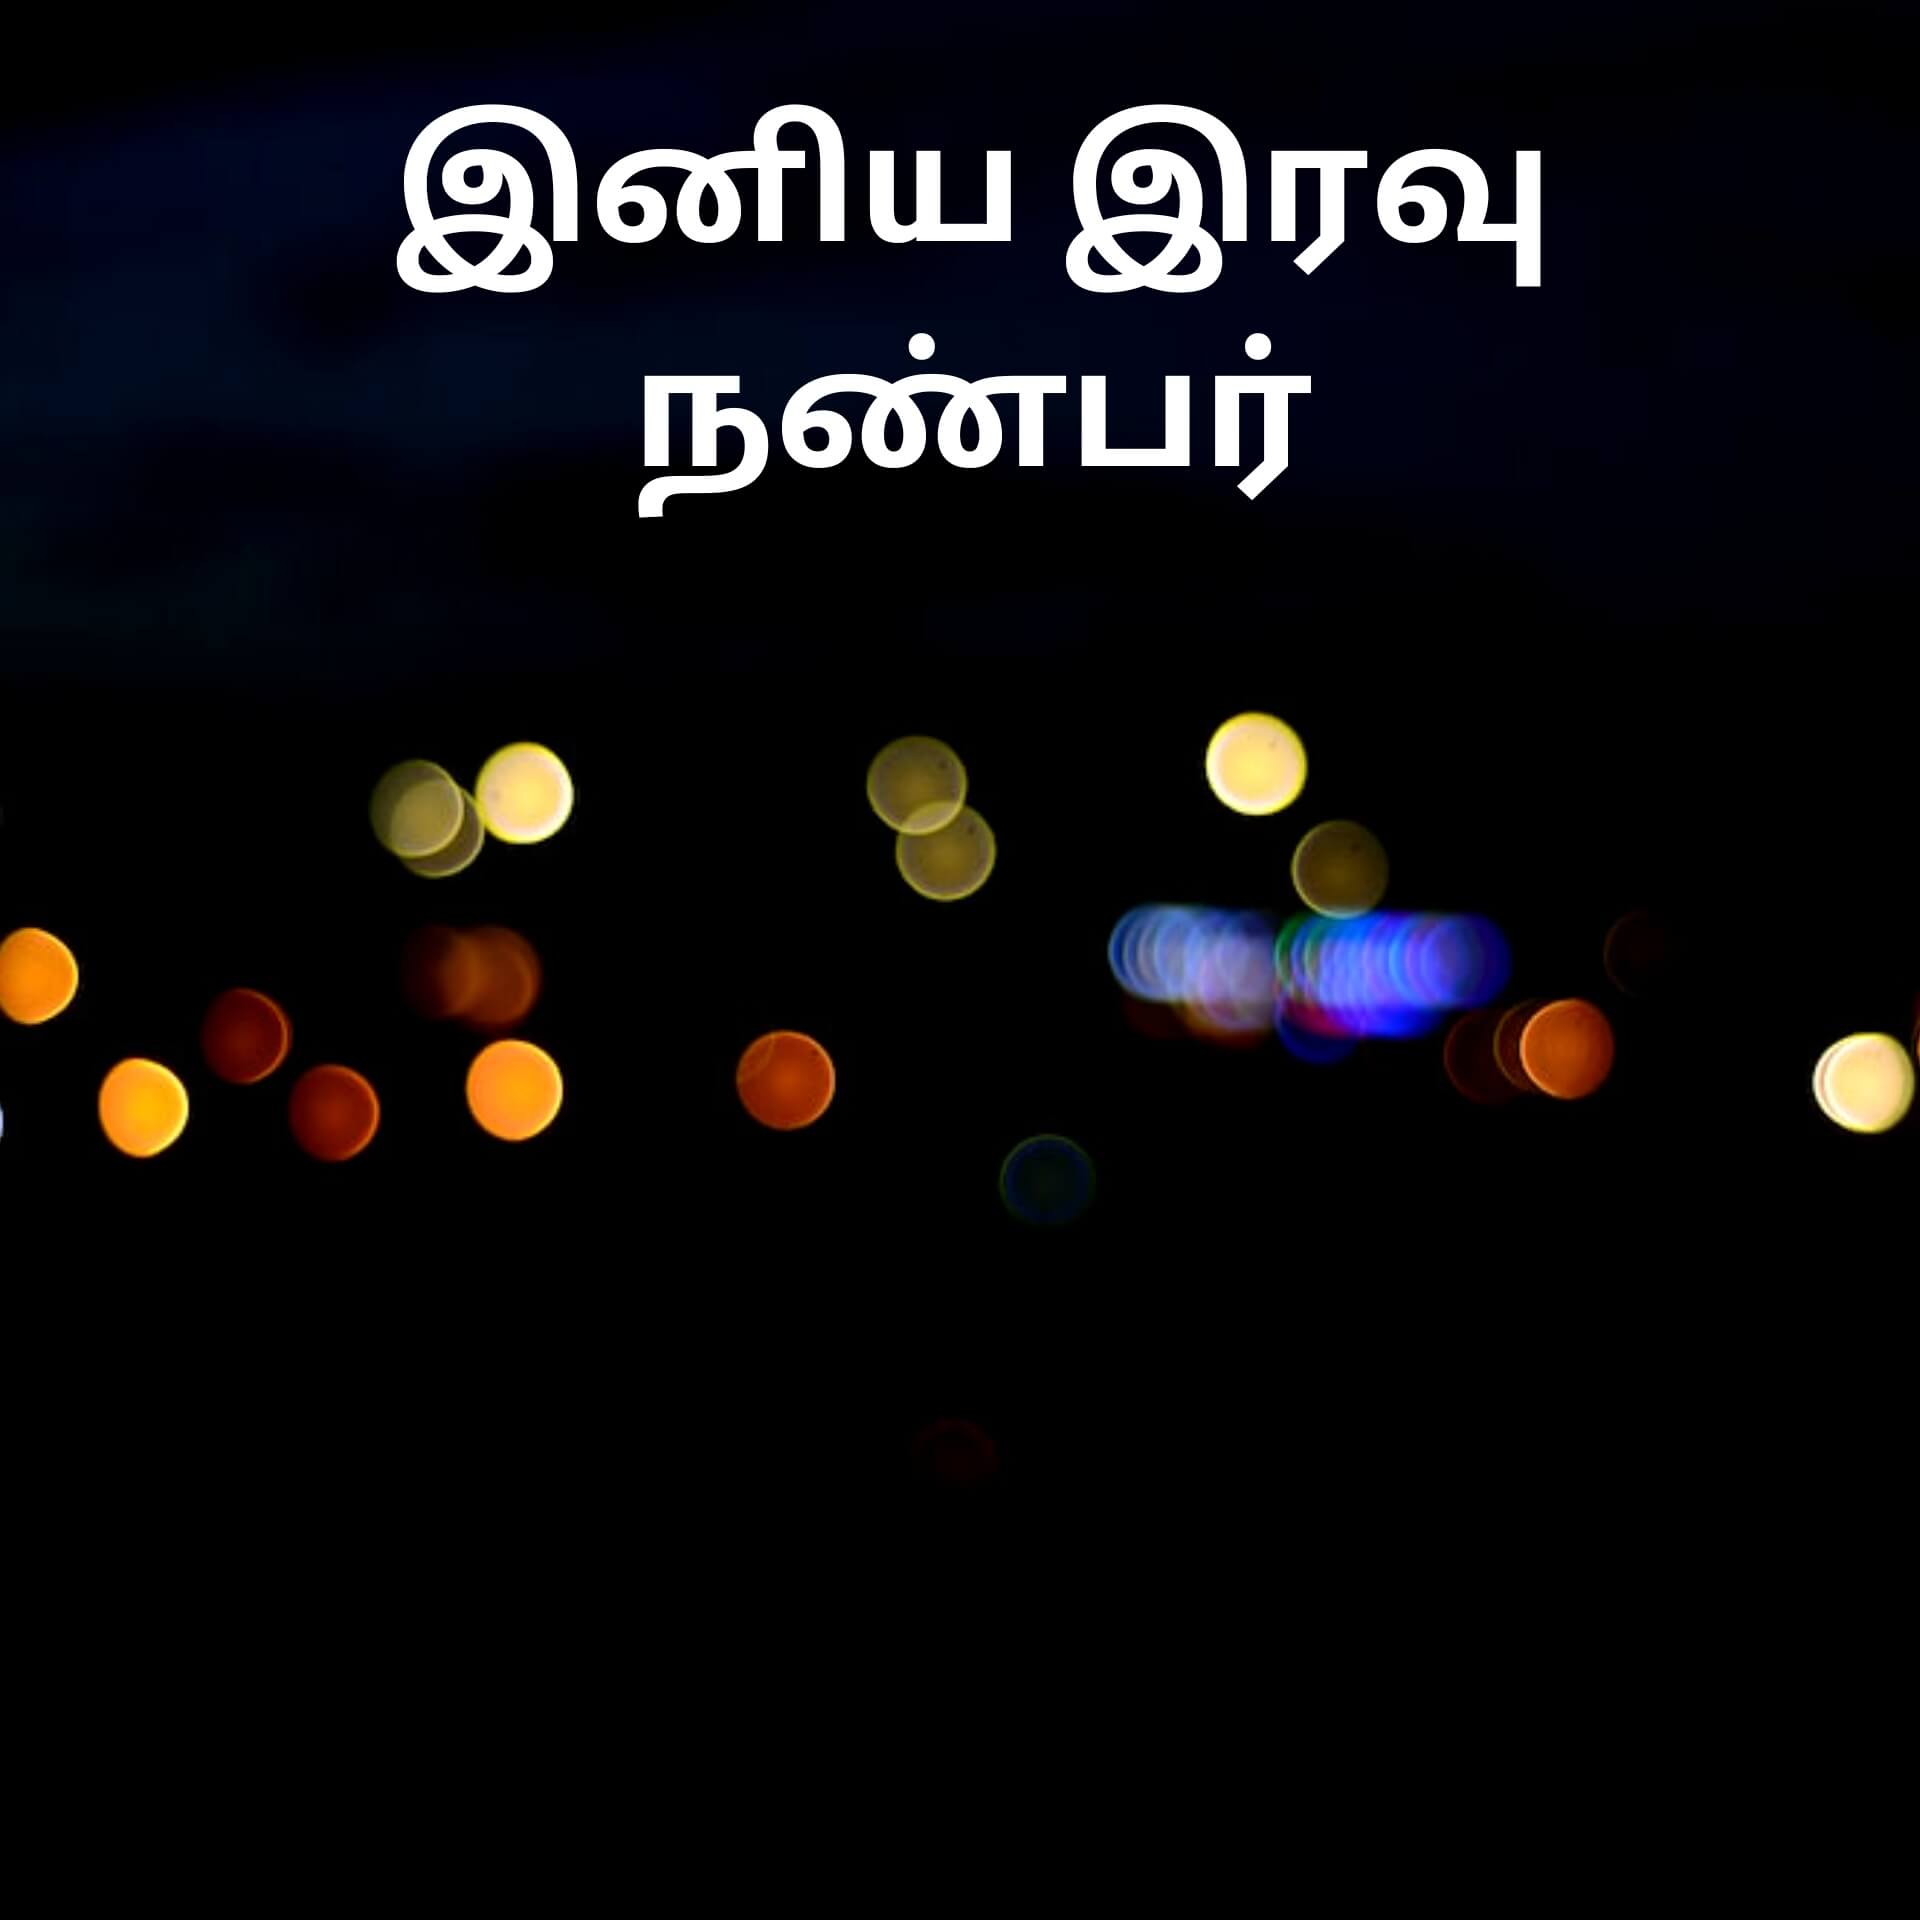 Tamil Good Night Pics Images Download